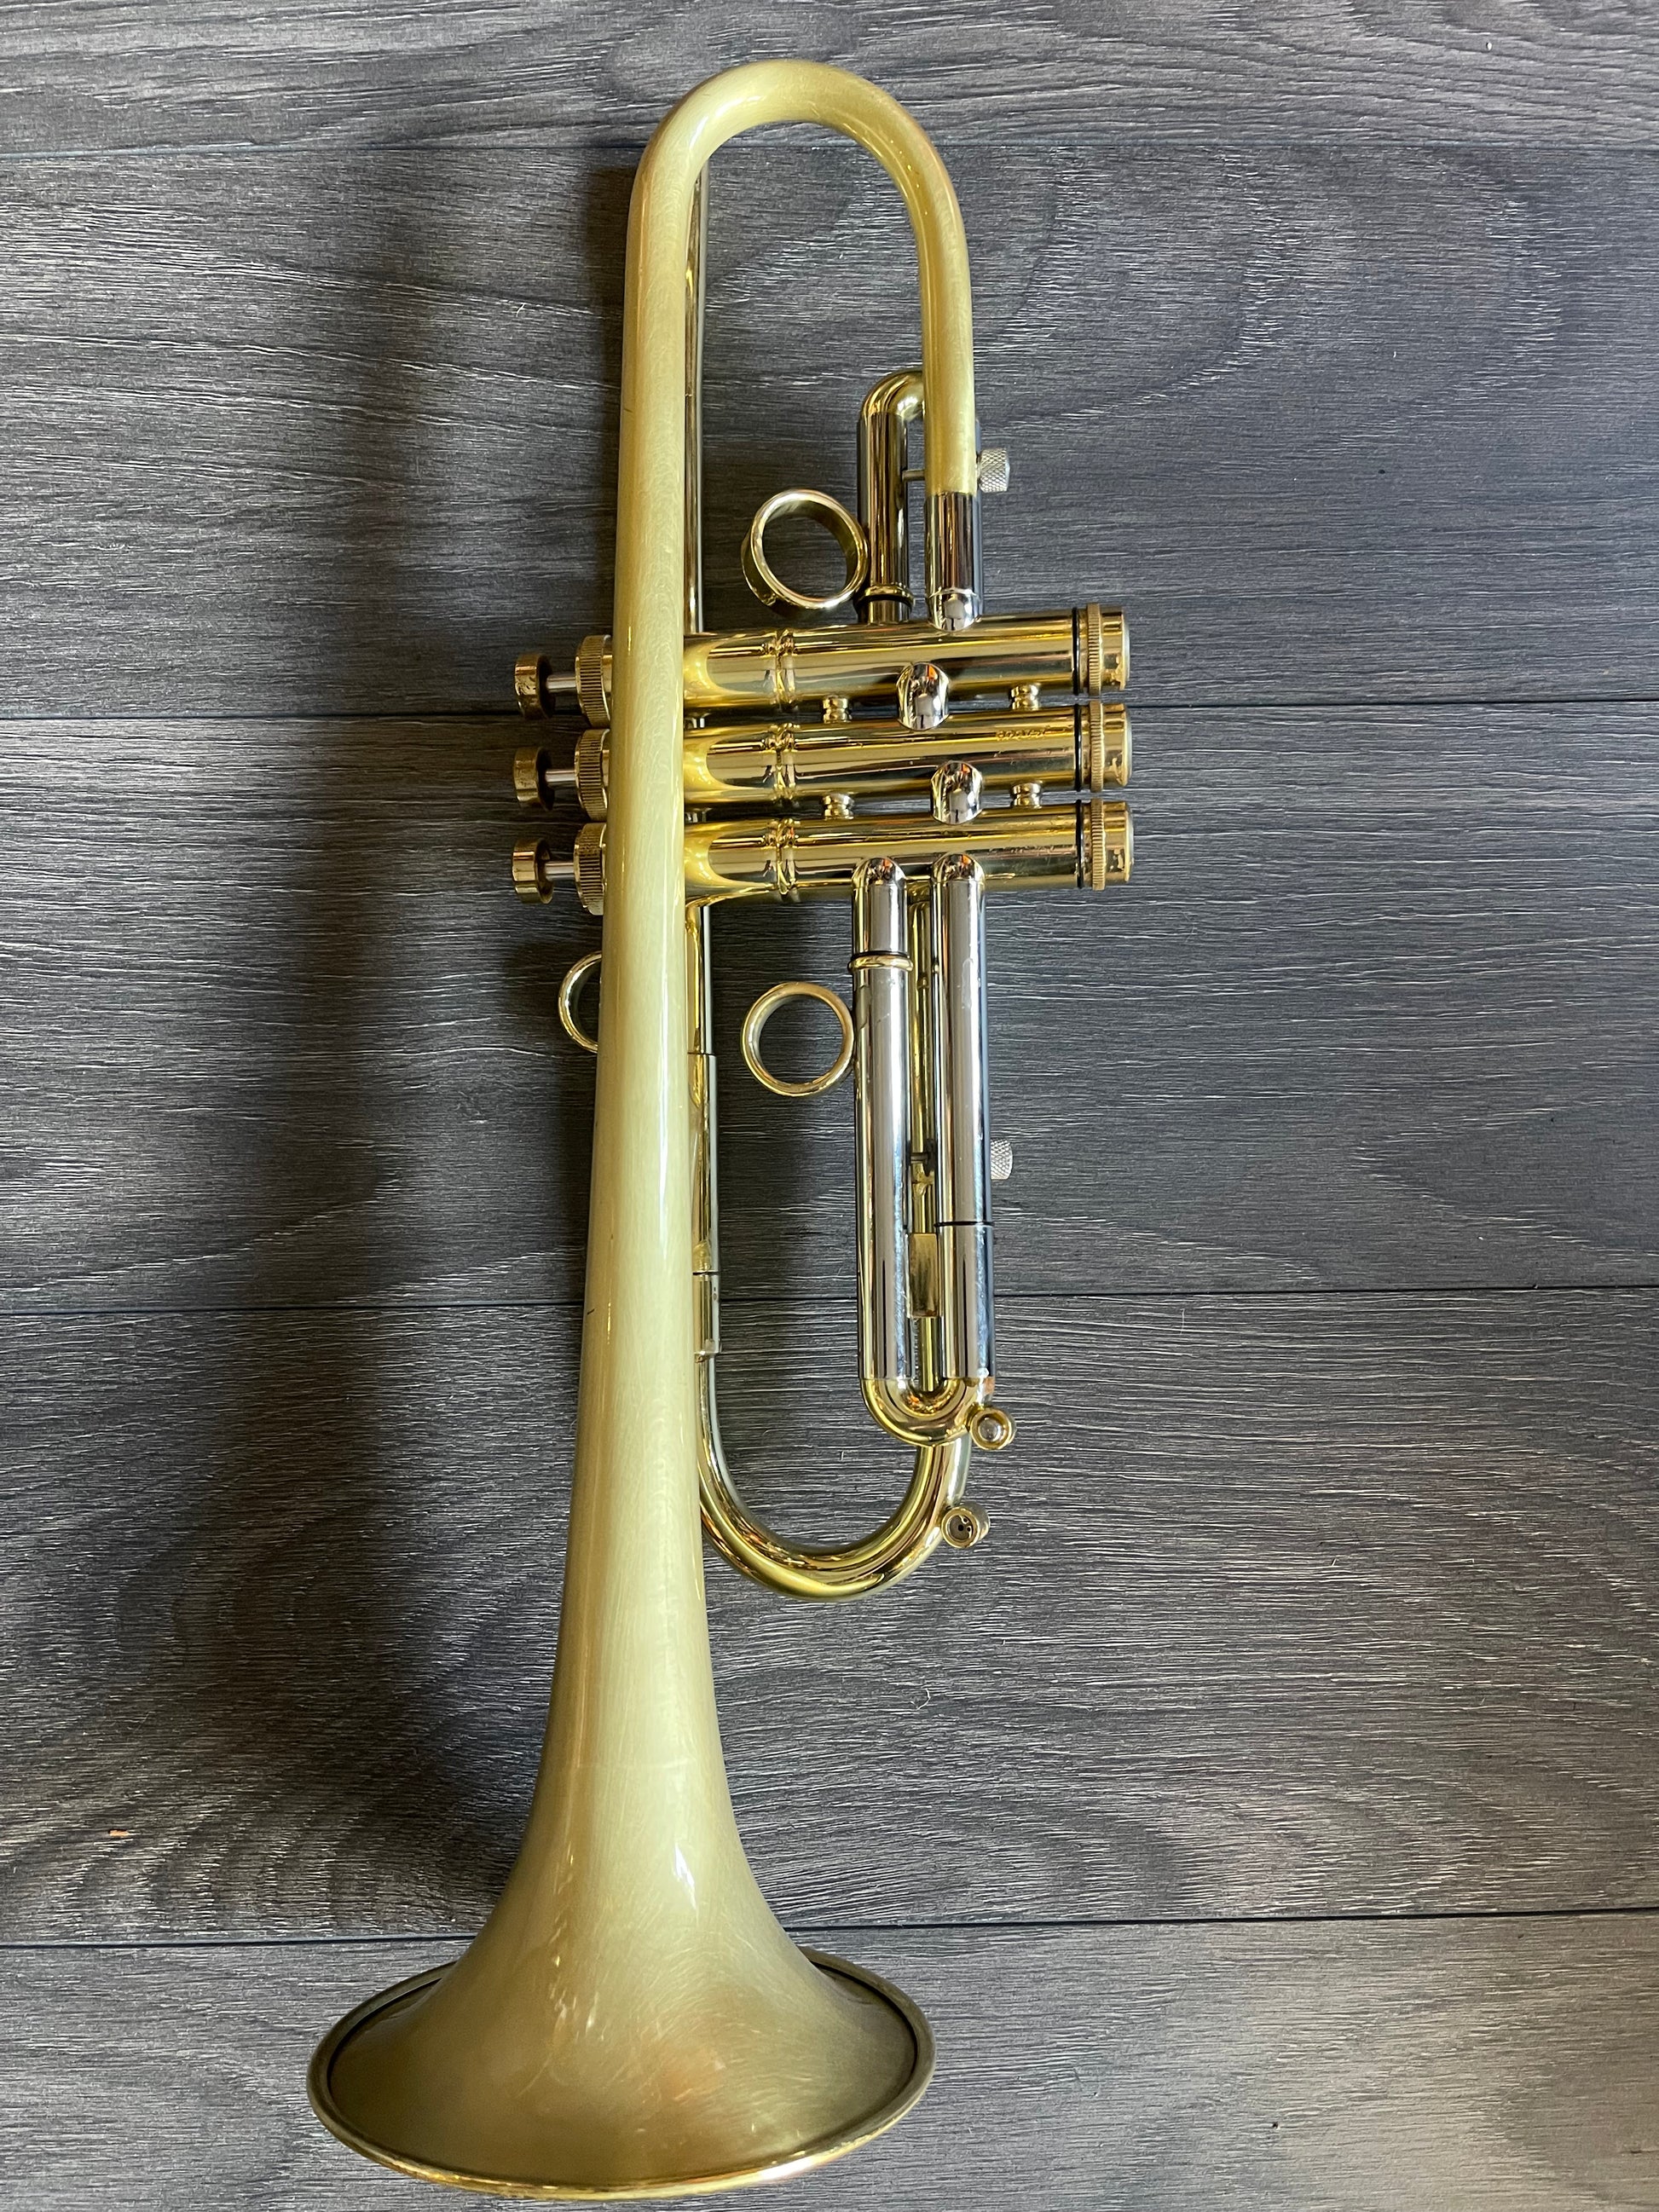 Custom Built Trumpets and Horns - Taylor Trumpets